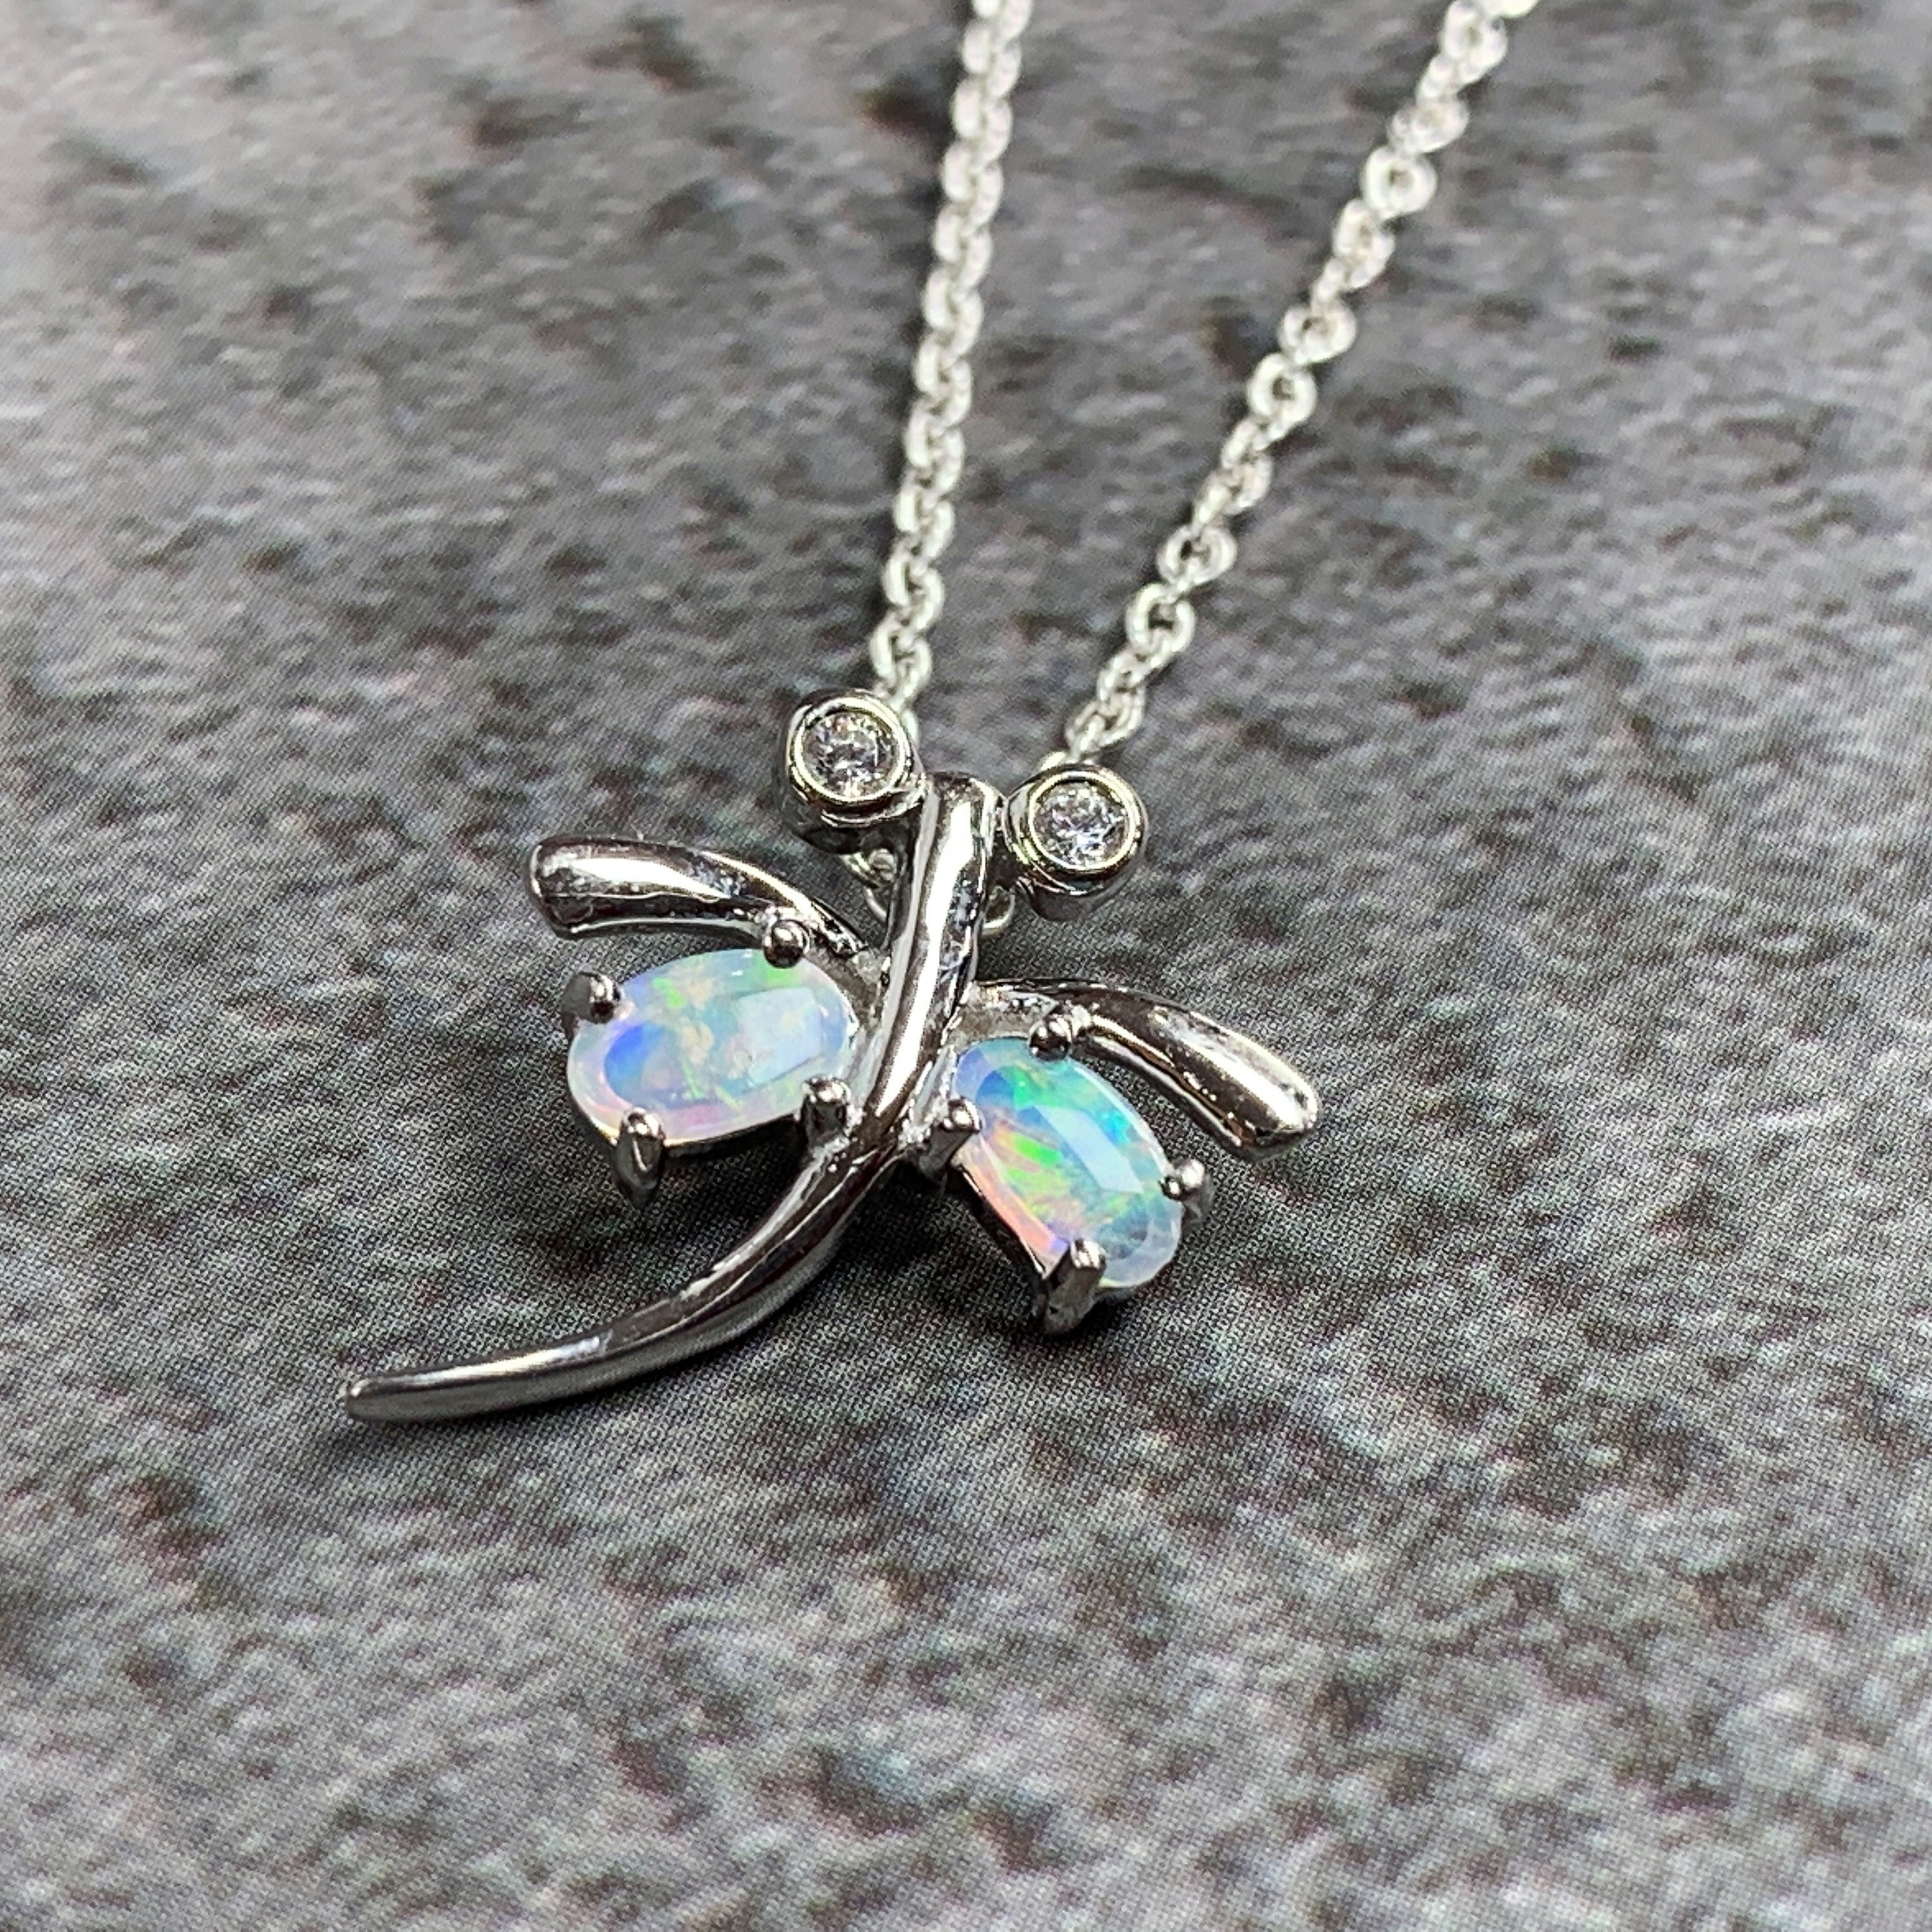 Sterling Silver dragonfly pendant with crystal opal - Masterpiece Jewellery Opal & Gems Sydney Australia | Online Shop